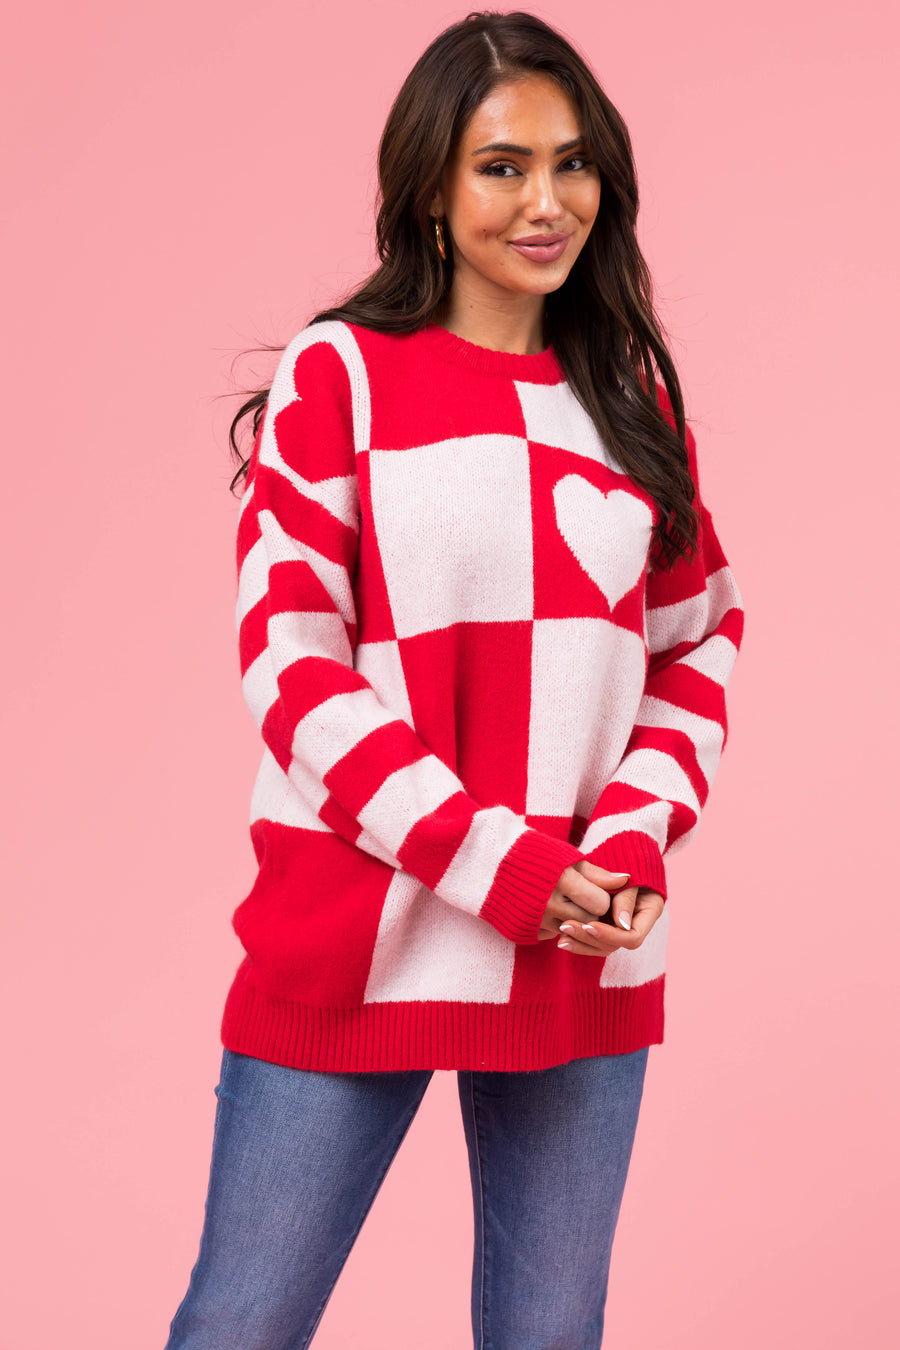 Lipstick Checkered Heart Contrast Print Sweater